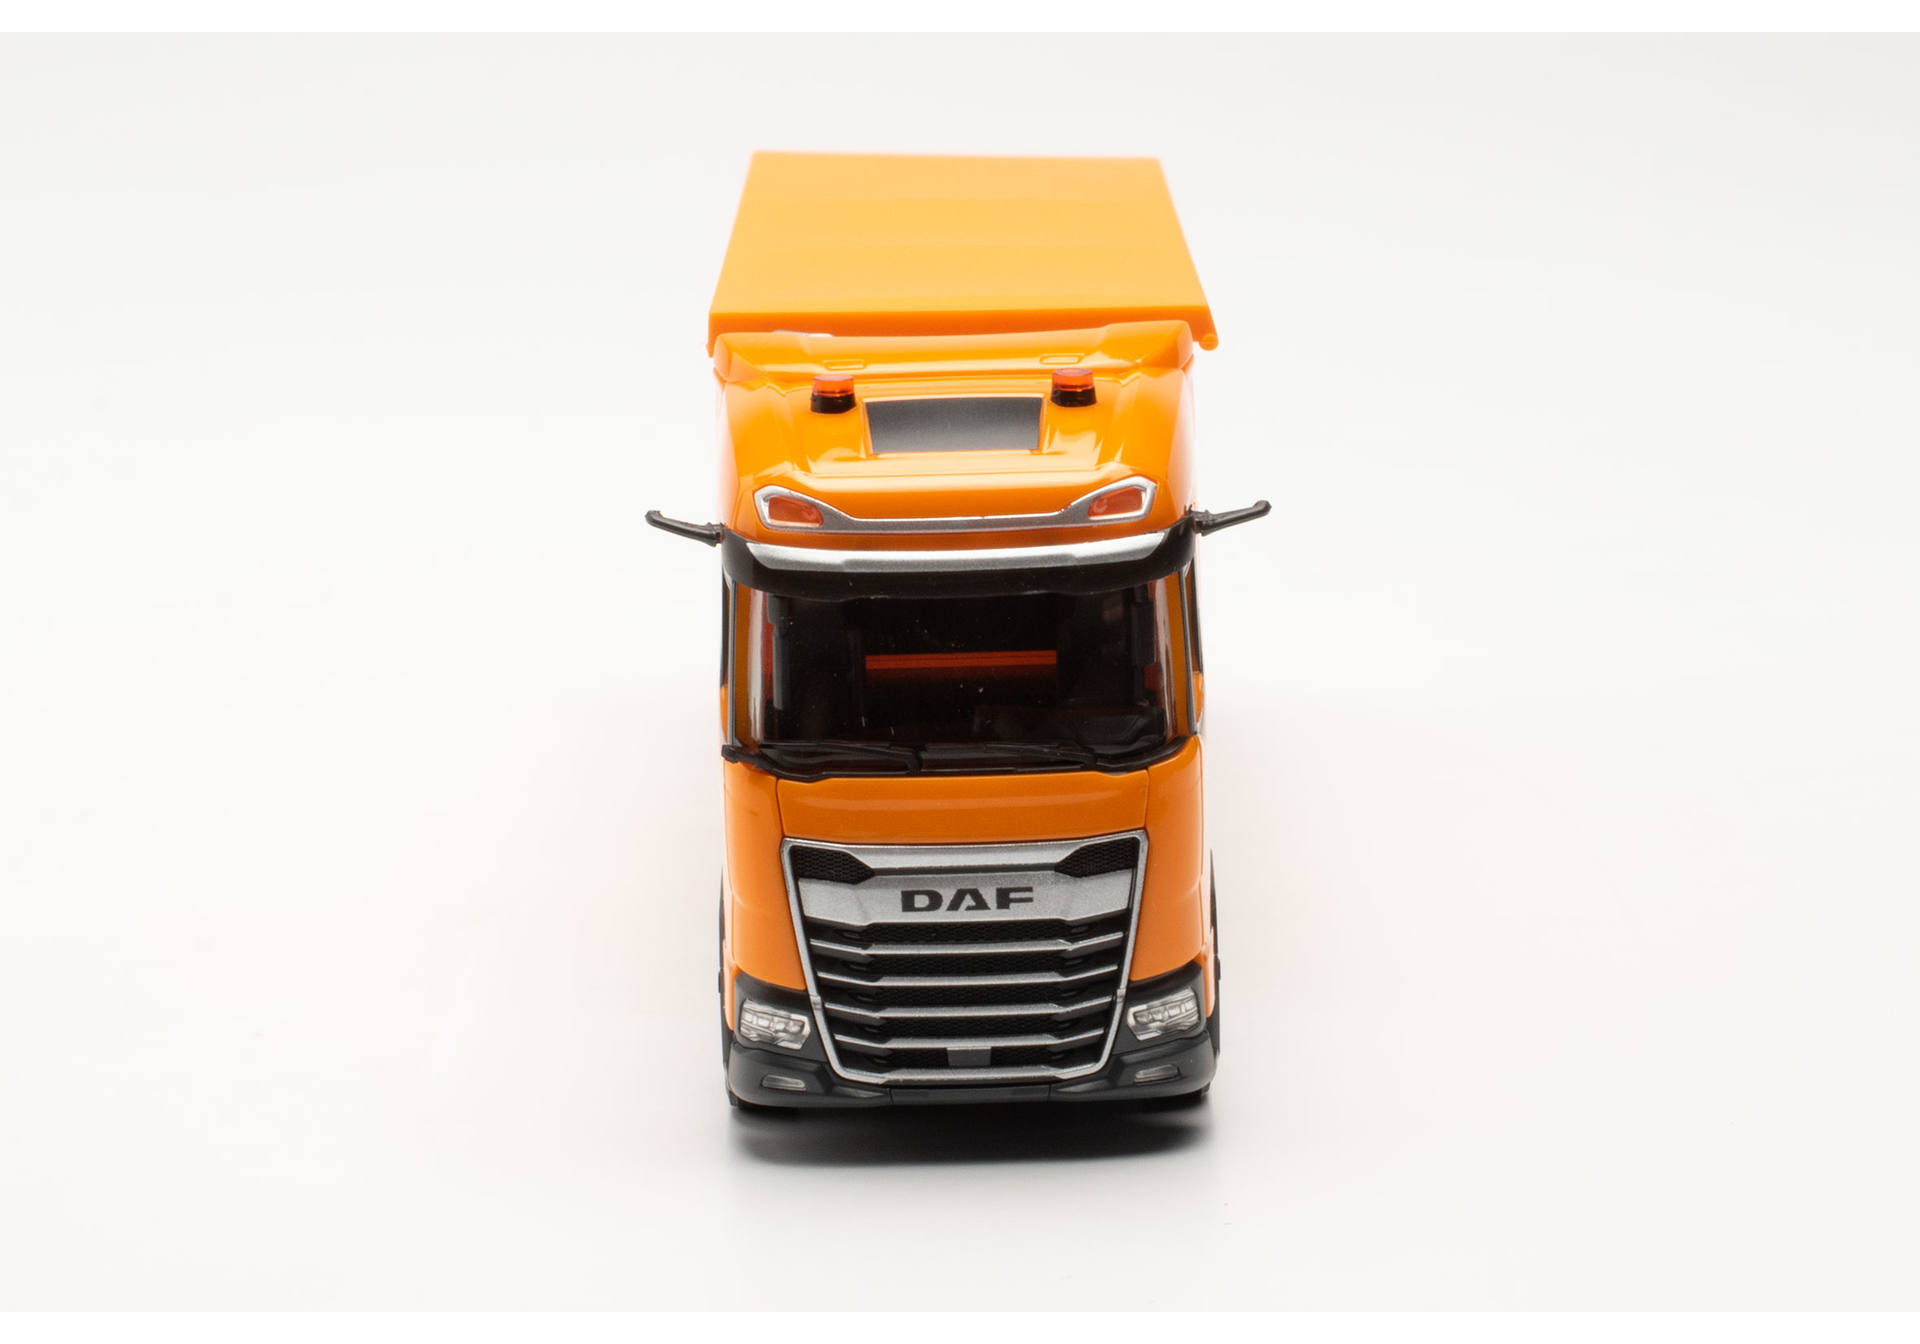 DAF XG rounded steel bodies semitrailer, orange